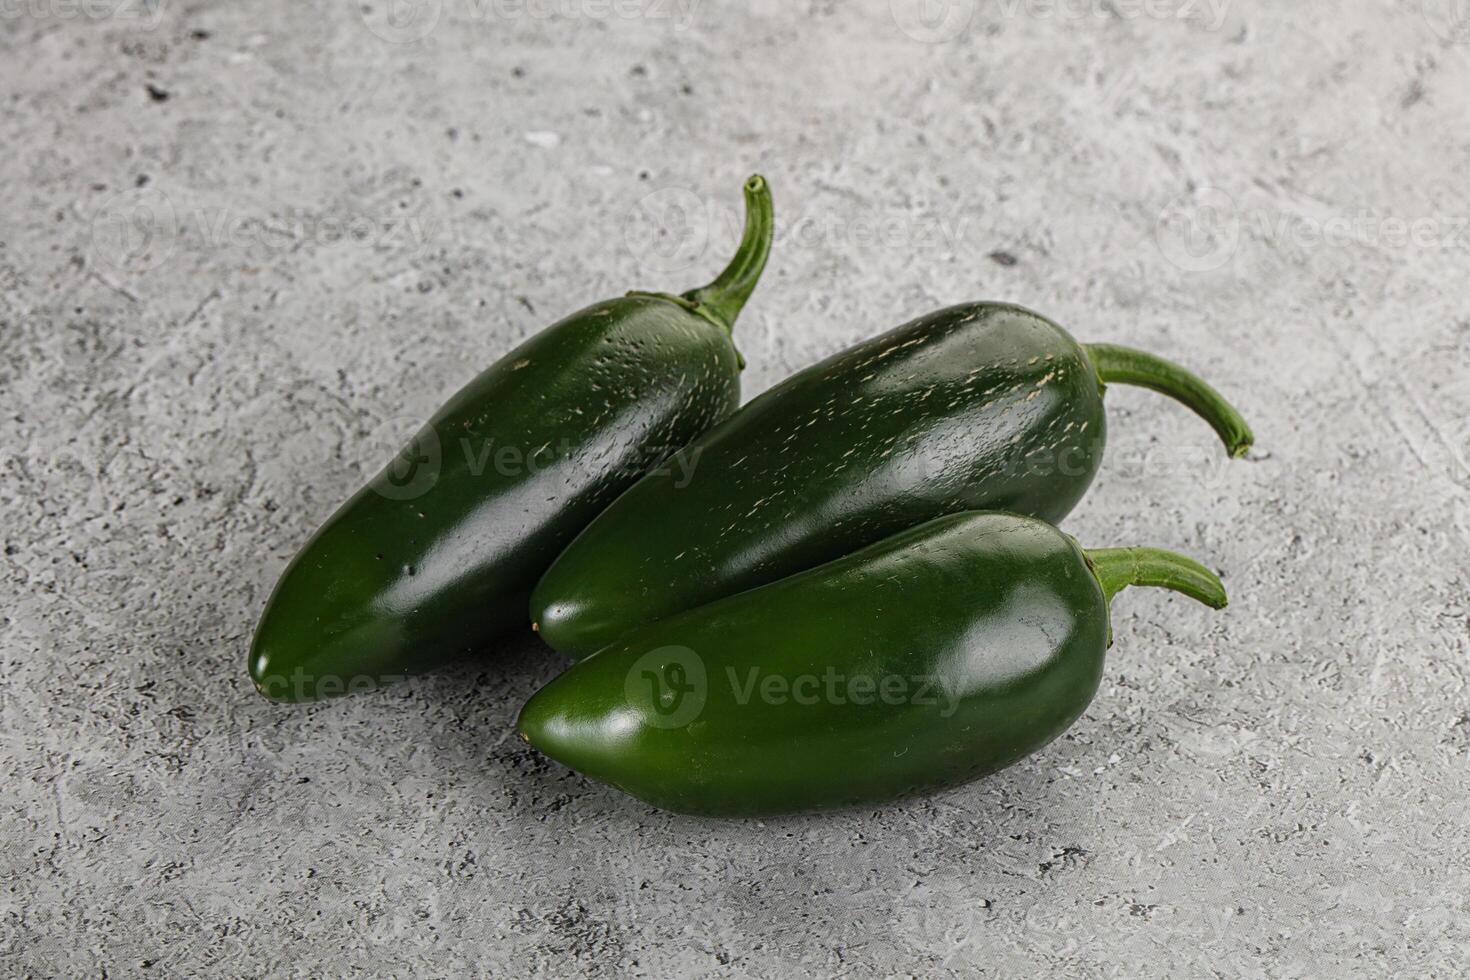 rå grön mexikansk jalapeno peppar foto